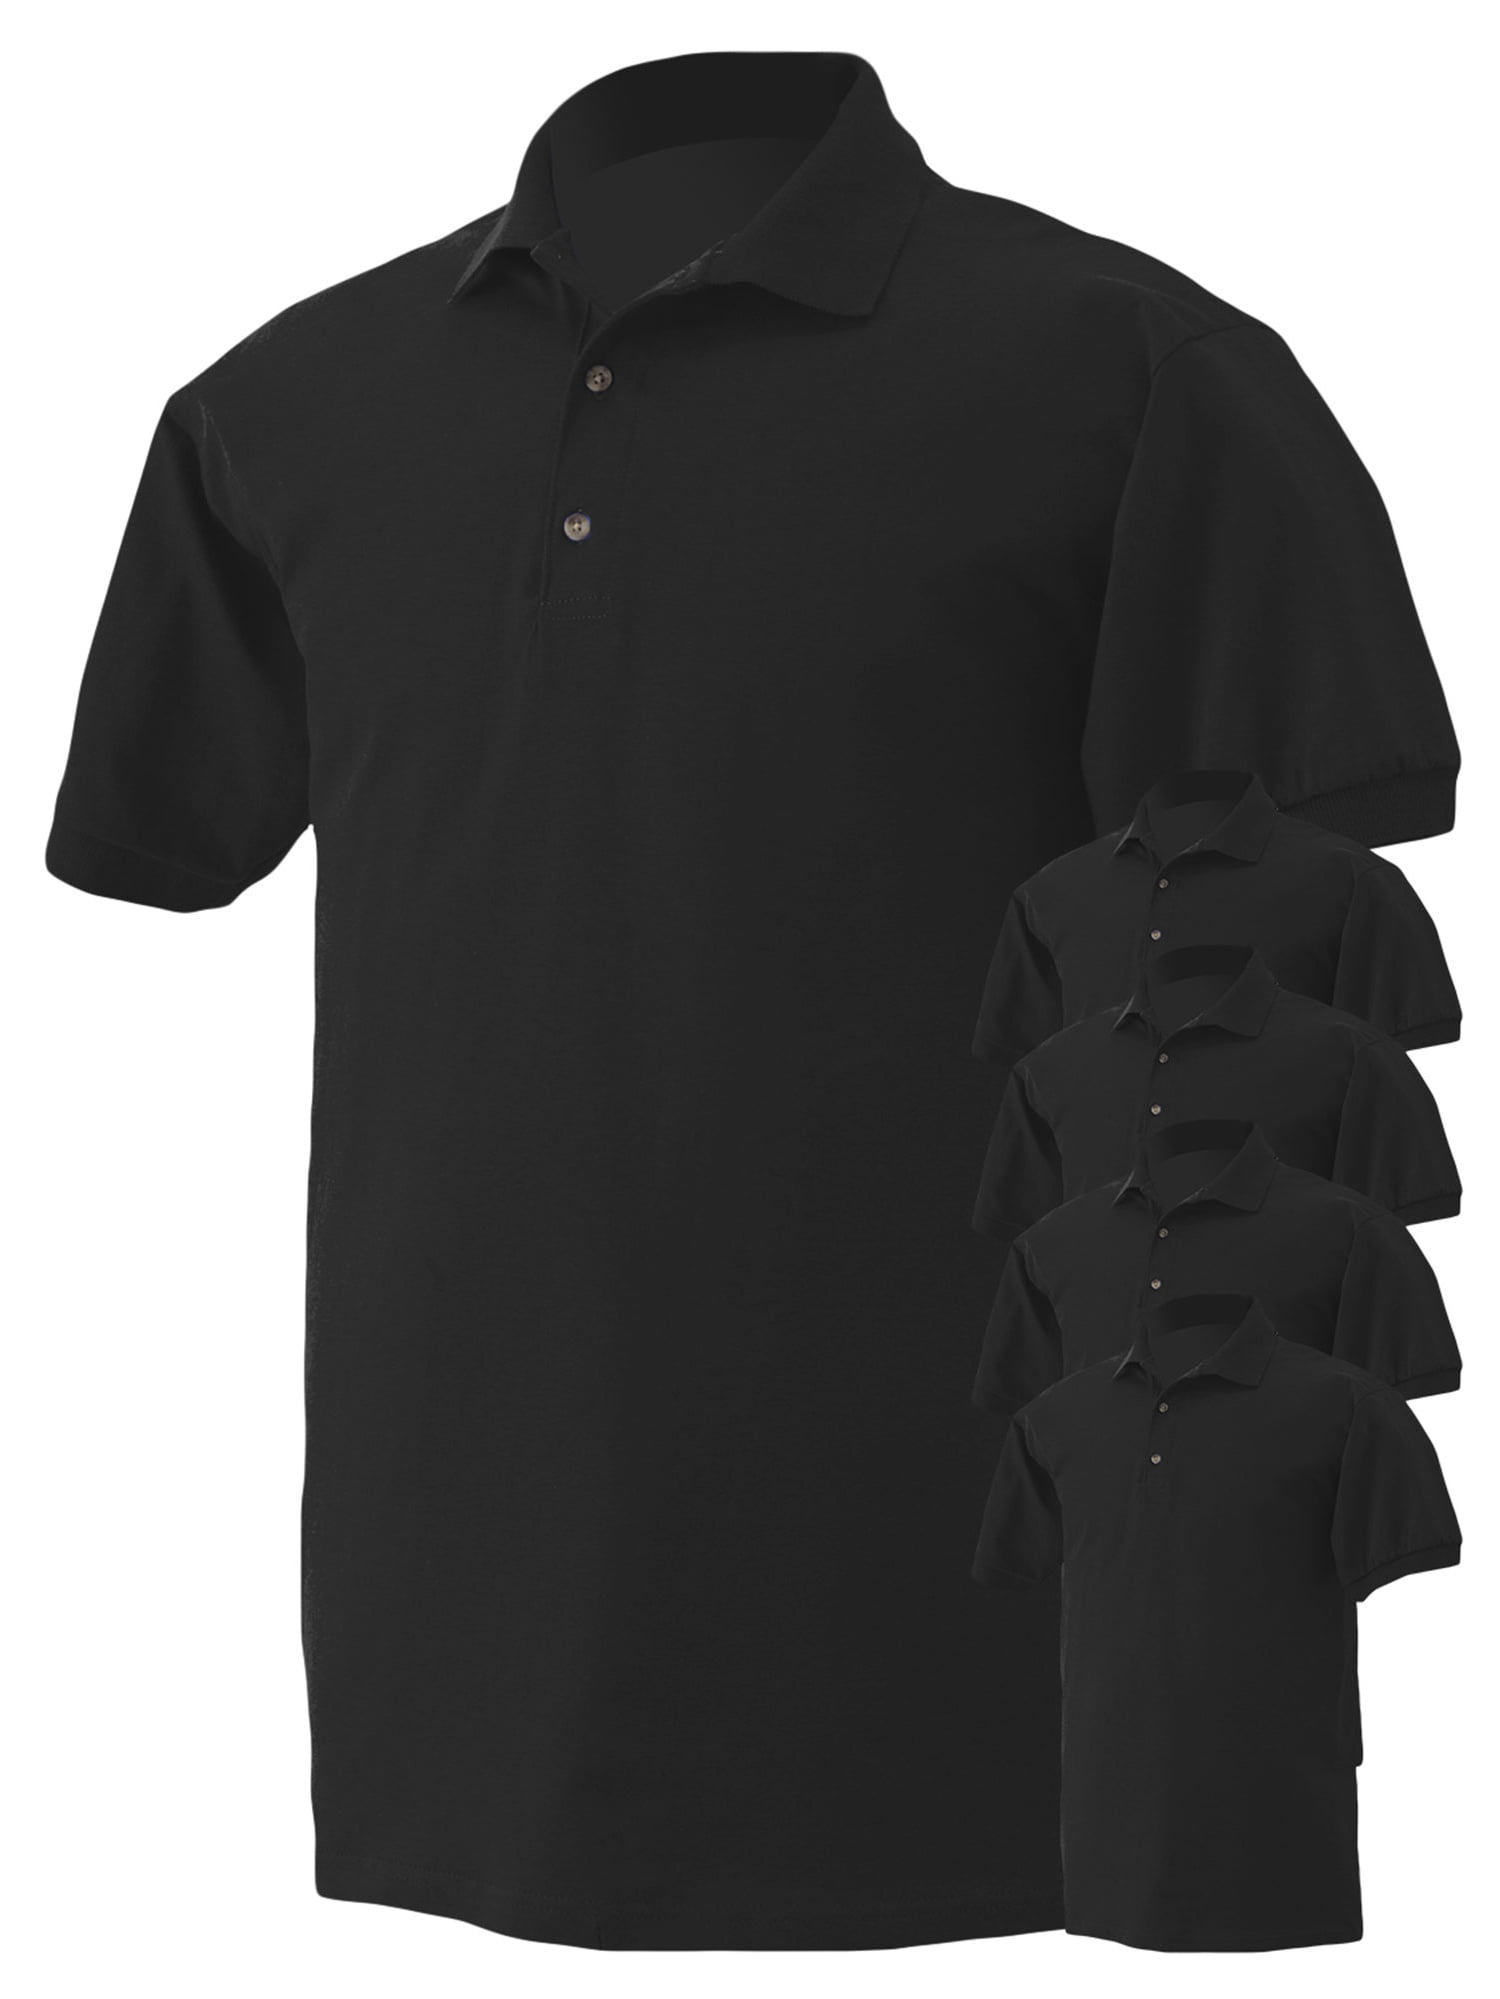 Black collared Shirt Walmart